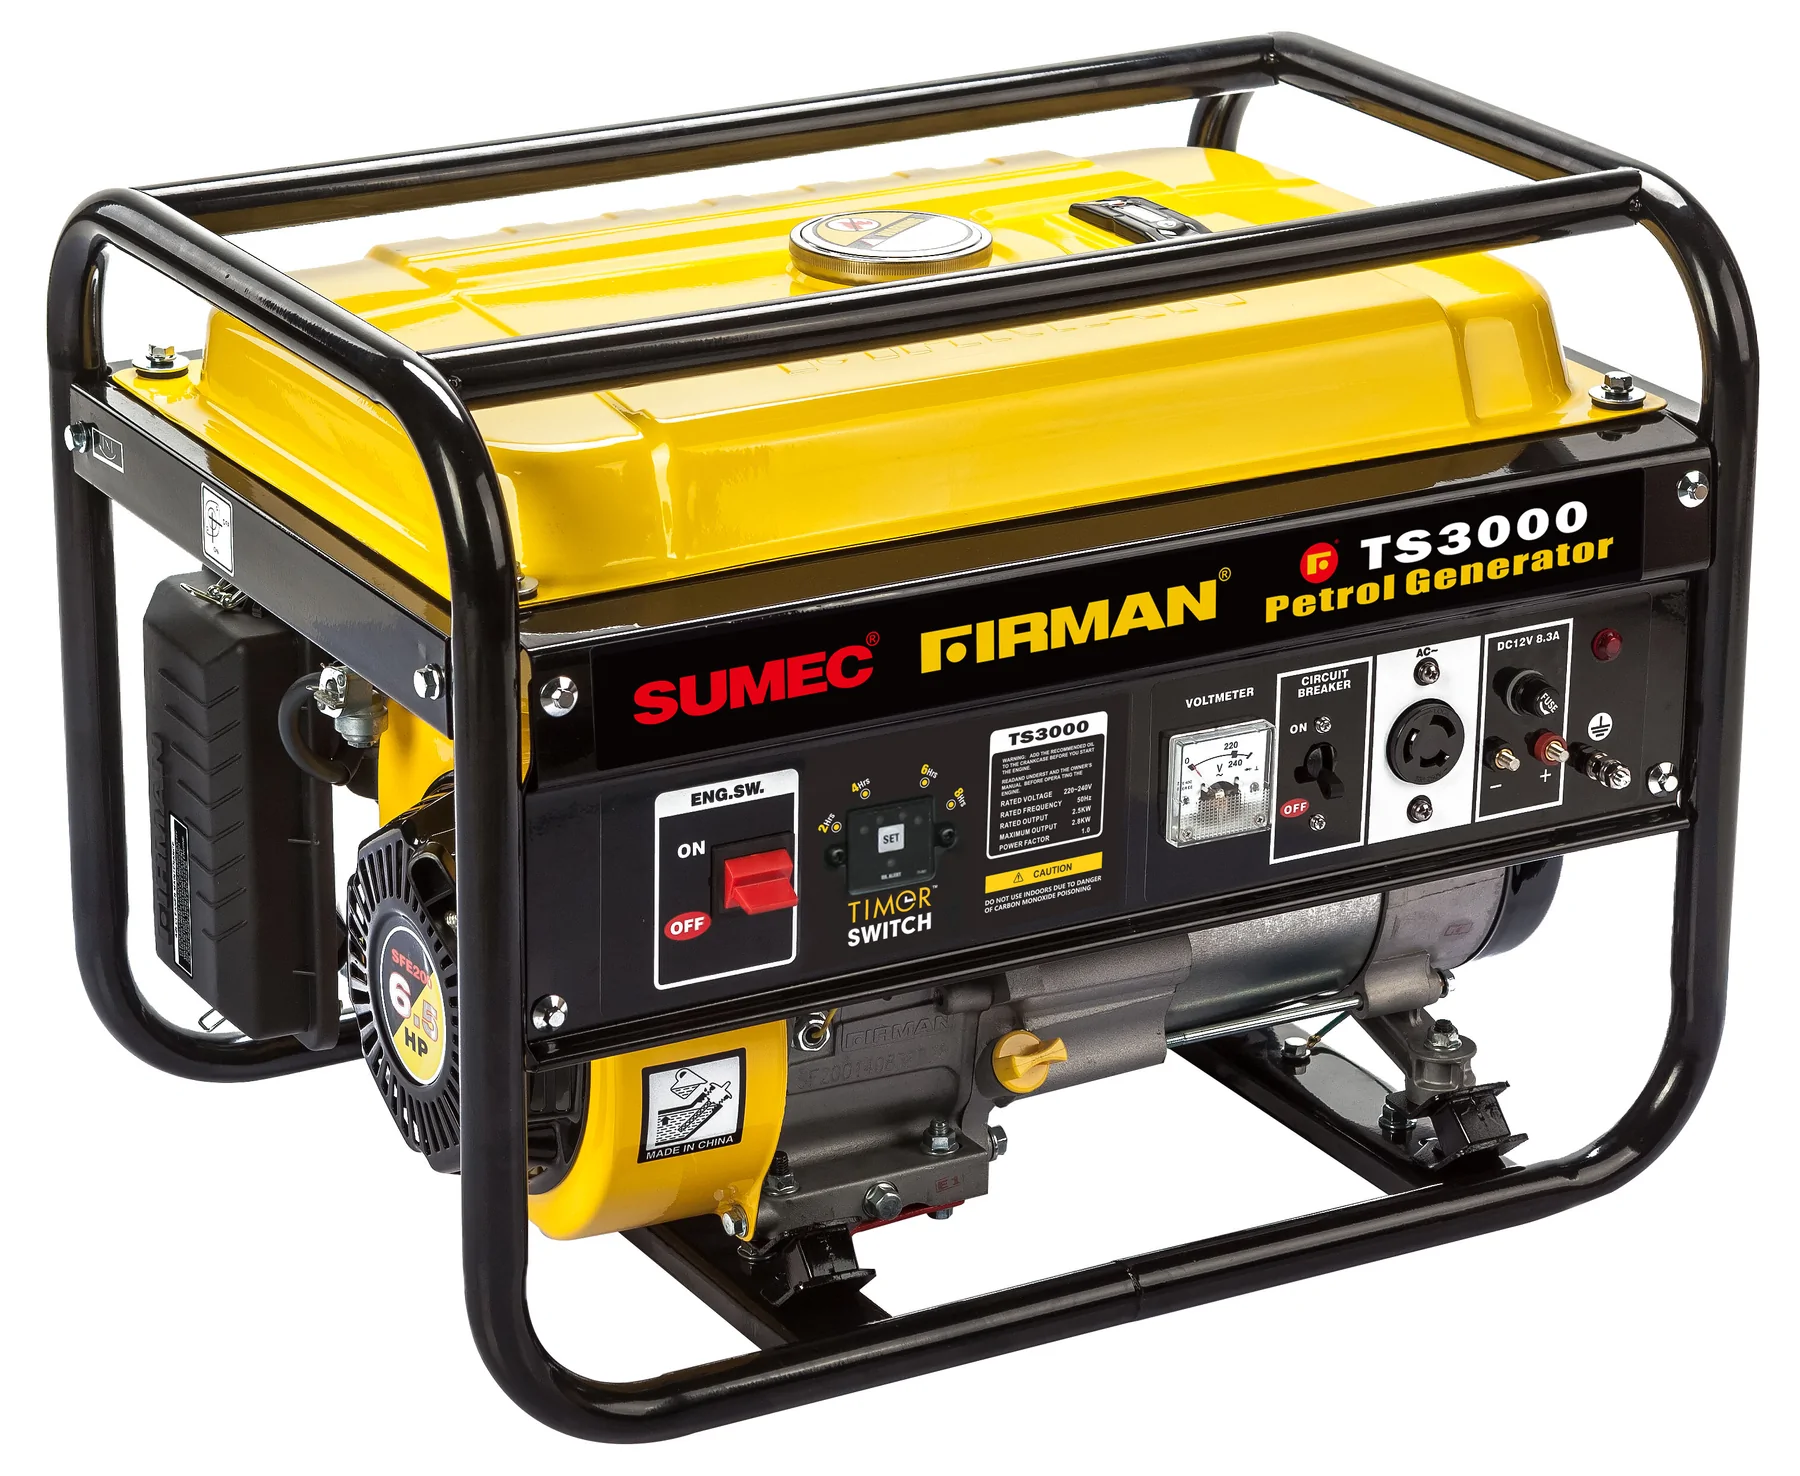 Sumec Firman 2.5kva Generator Timer switch Manual - TS3000